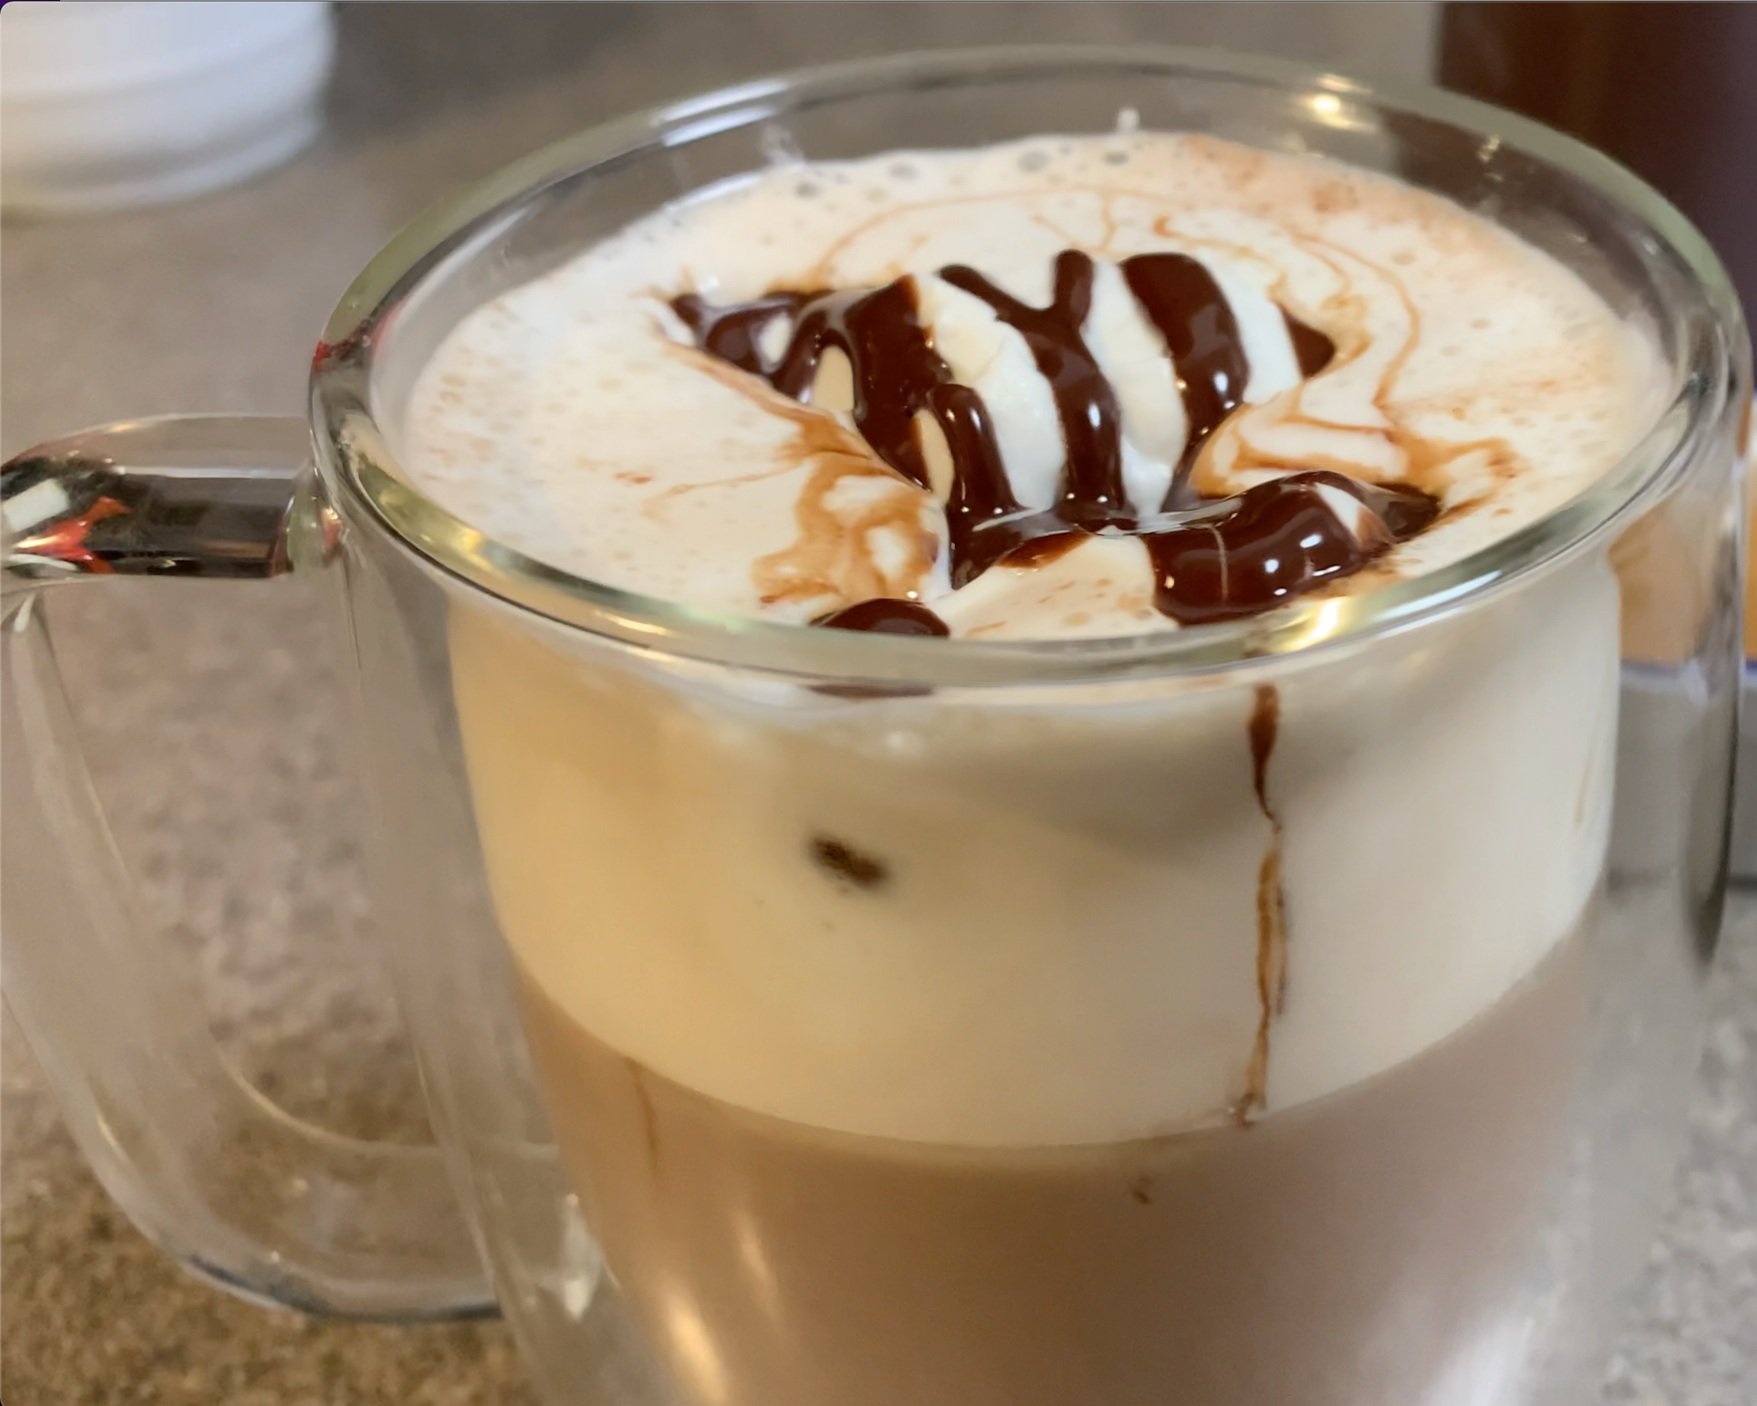 How to Make Starbucks Mocha, How To Make a Cafe Mocha without a Machine